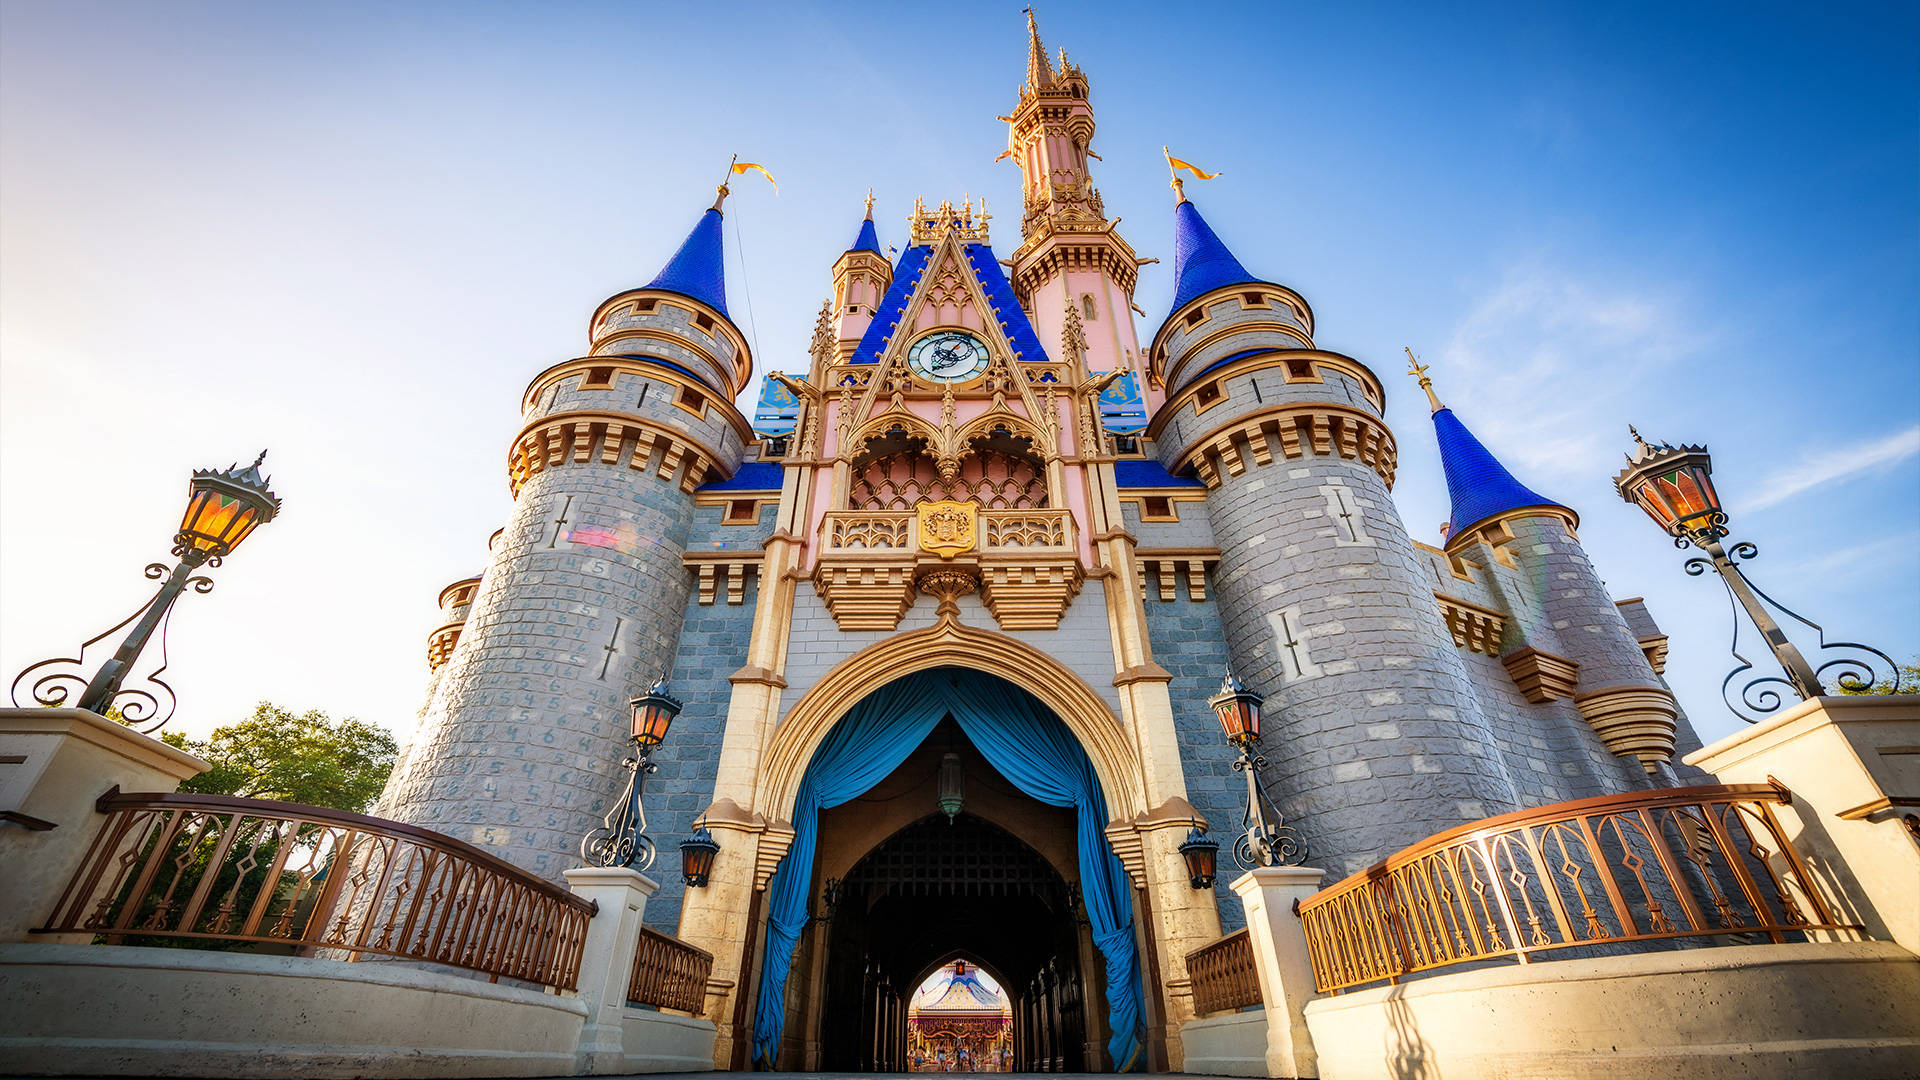 Blue Castle Walt Disney World Desktop Background